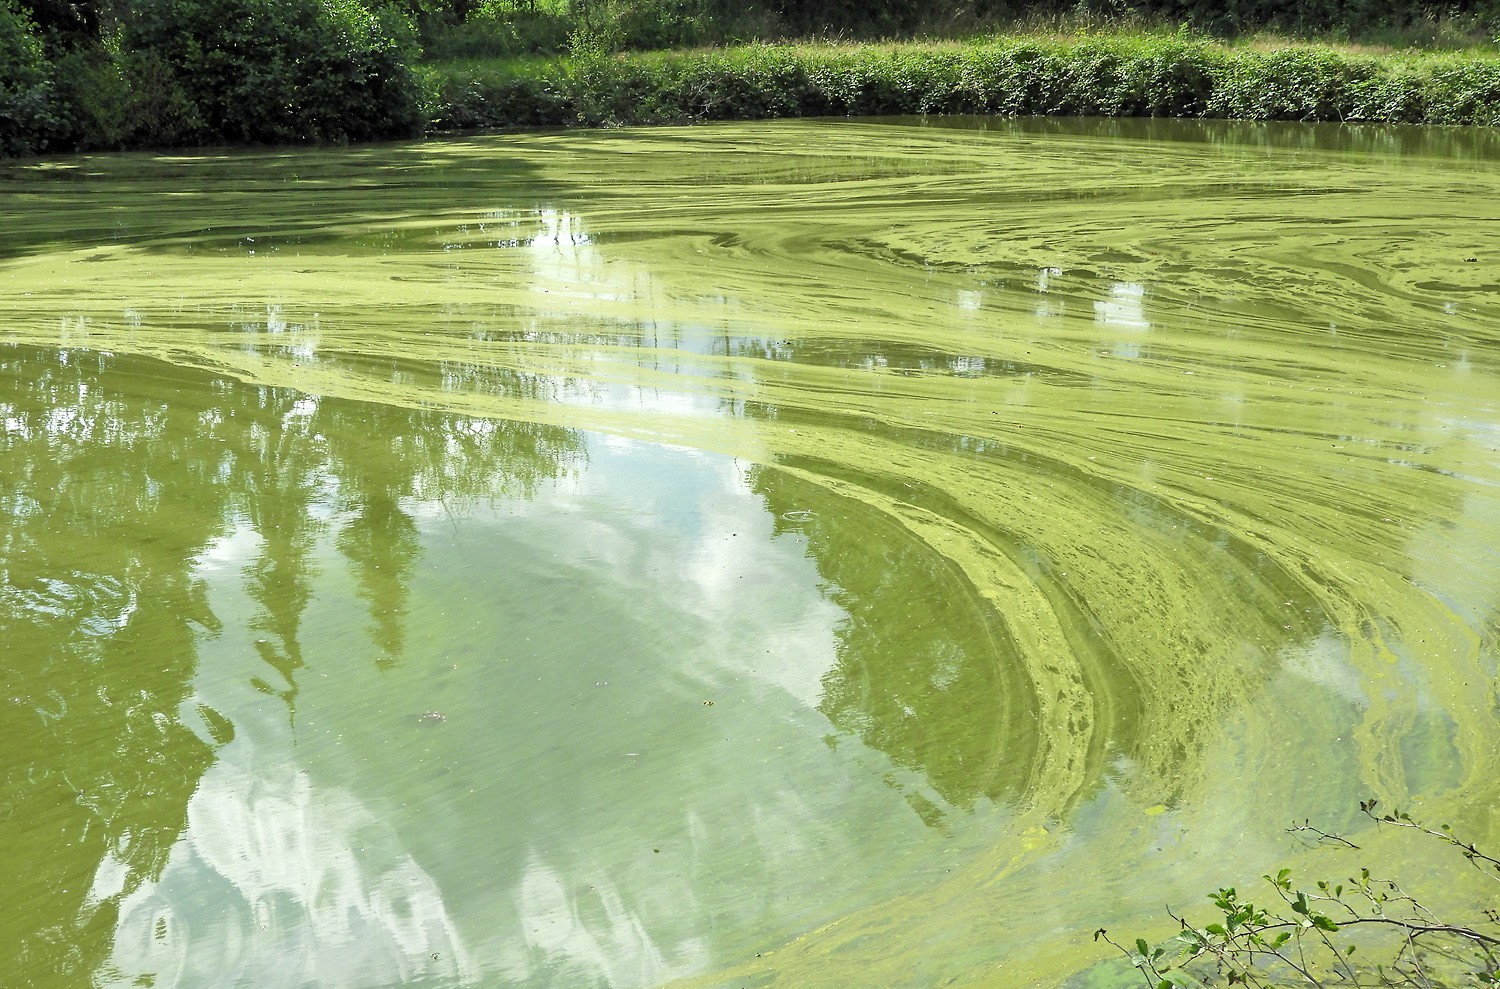 Cyanobakterien Blaualgenblüte in einem Teich